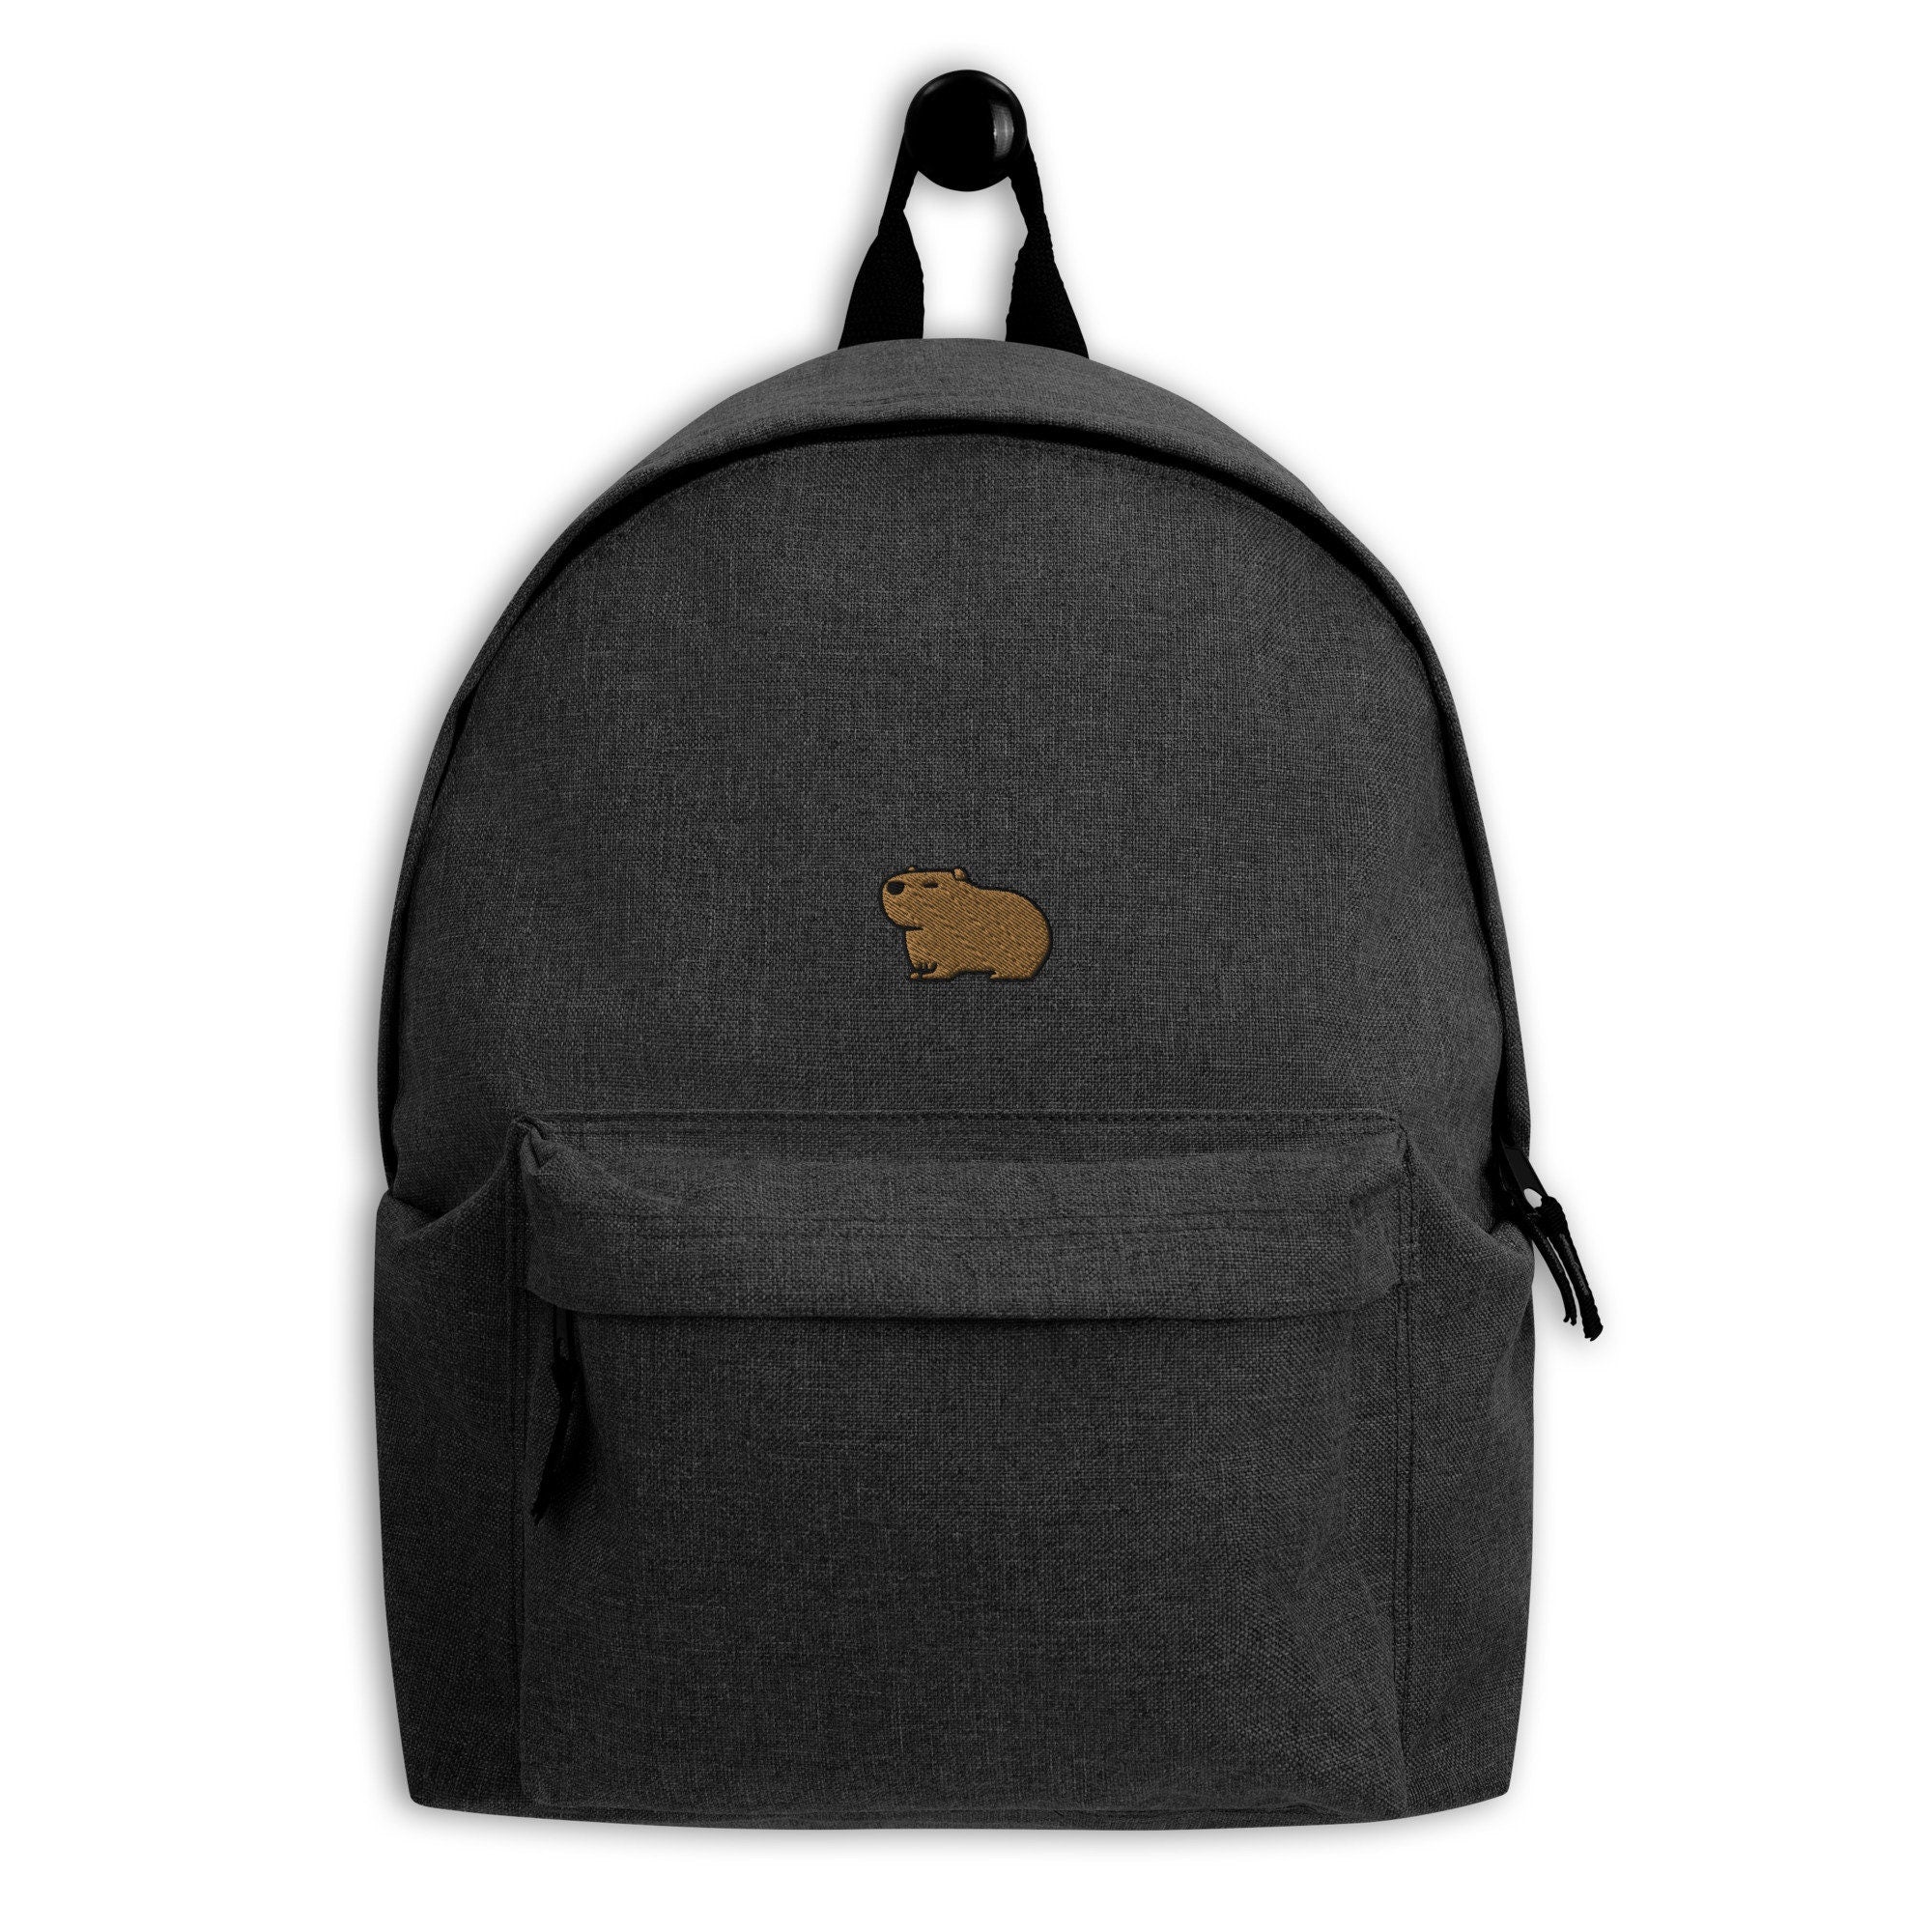 Capybara Embroidered Backpack, Handmade Capybara Backpack, Capybara Lover Embroidered Backpack, Capybara School Bag Gift